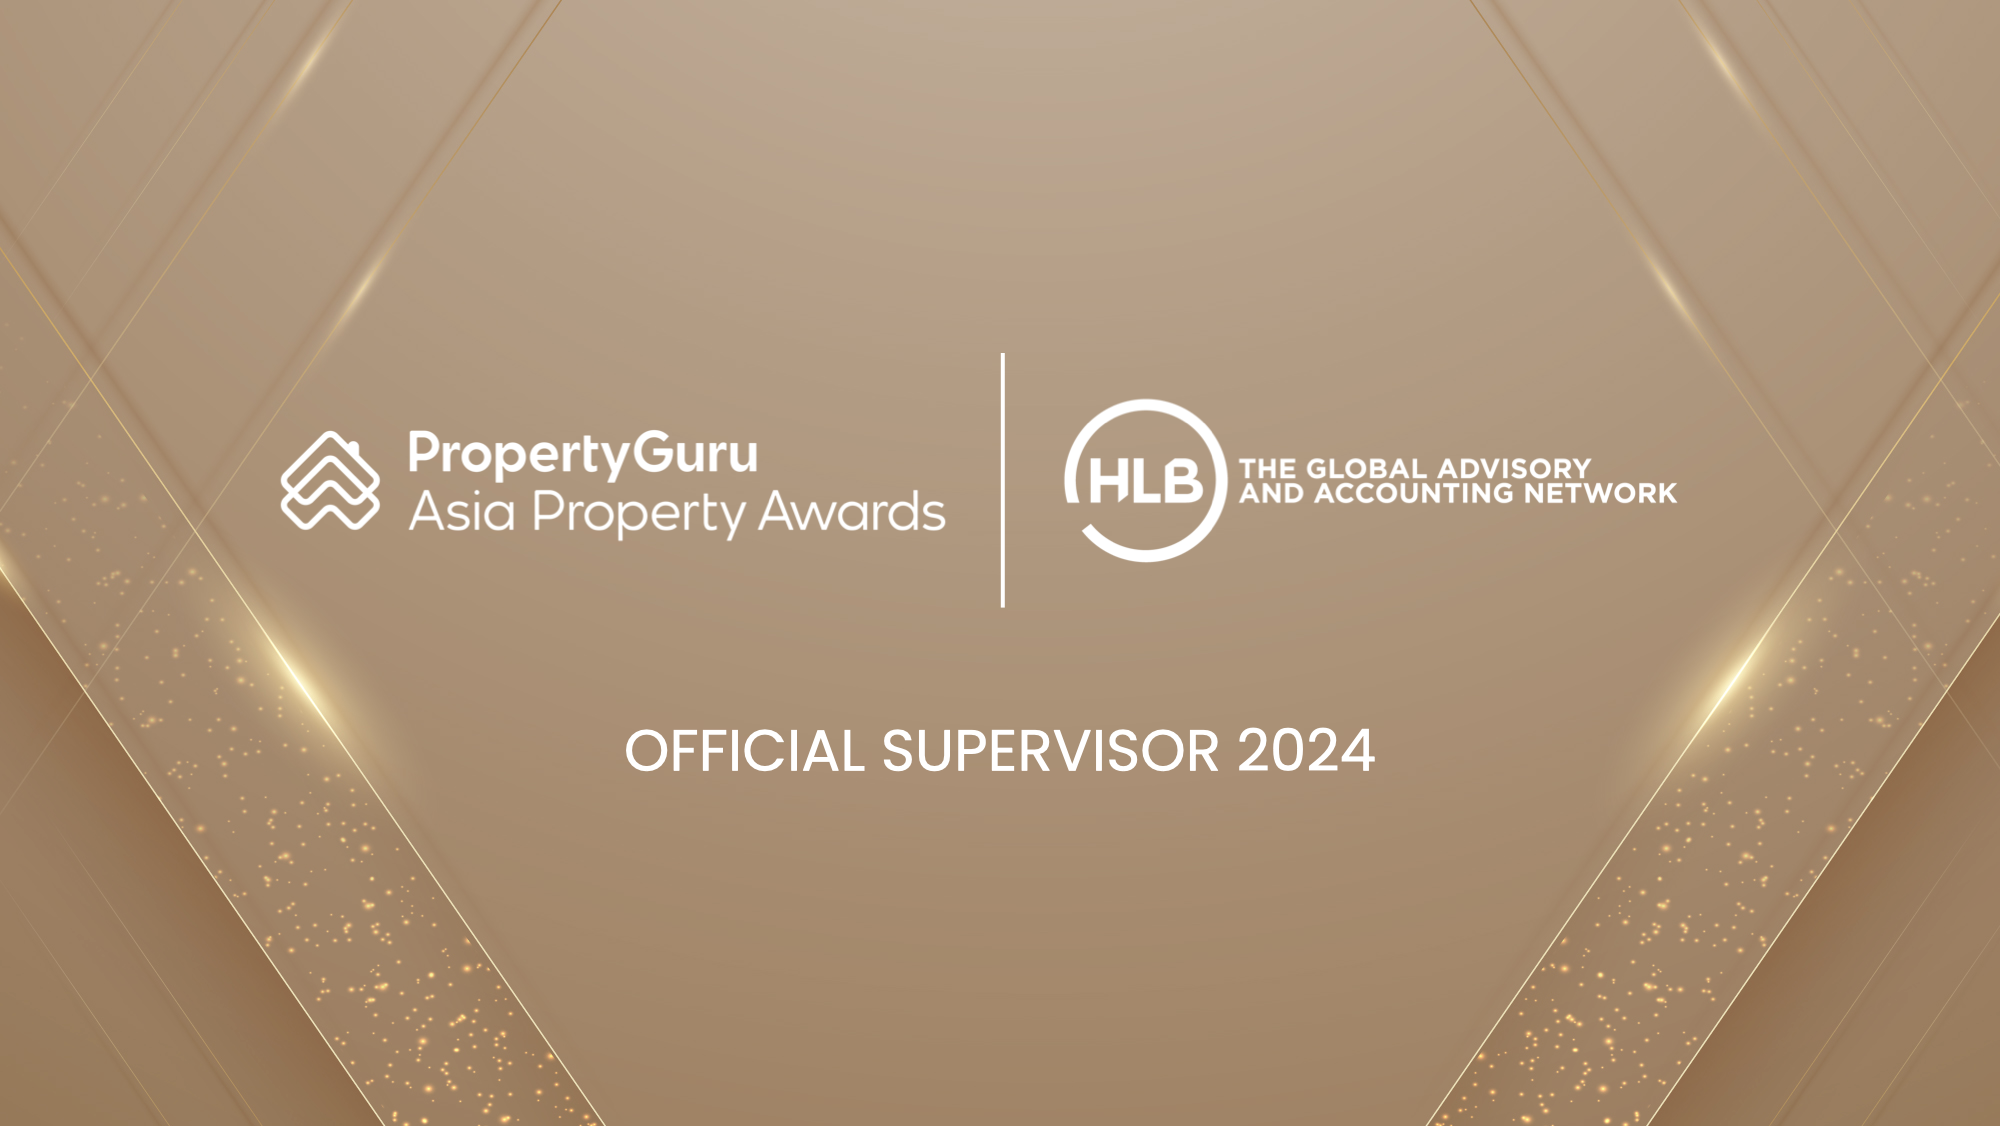 PropertyGuru Asia Property Awards 2024 series